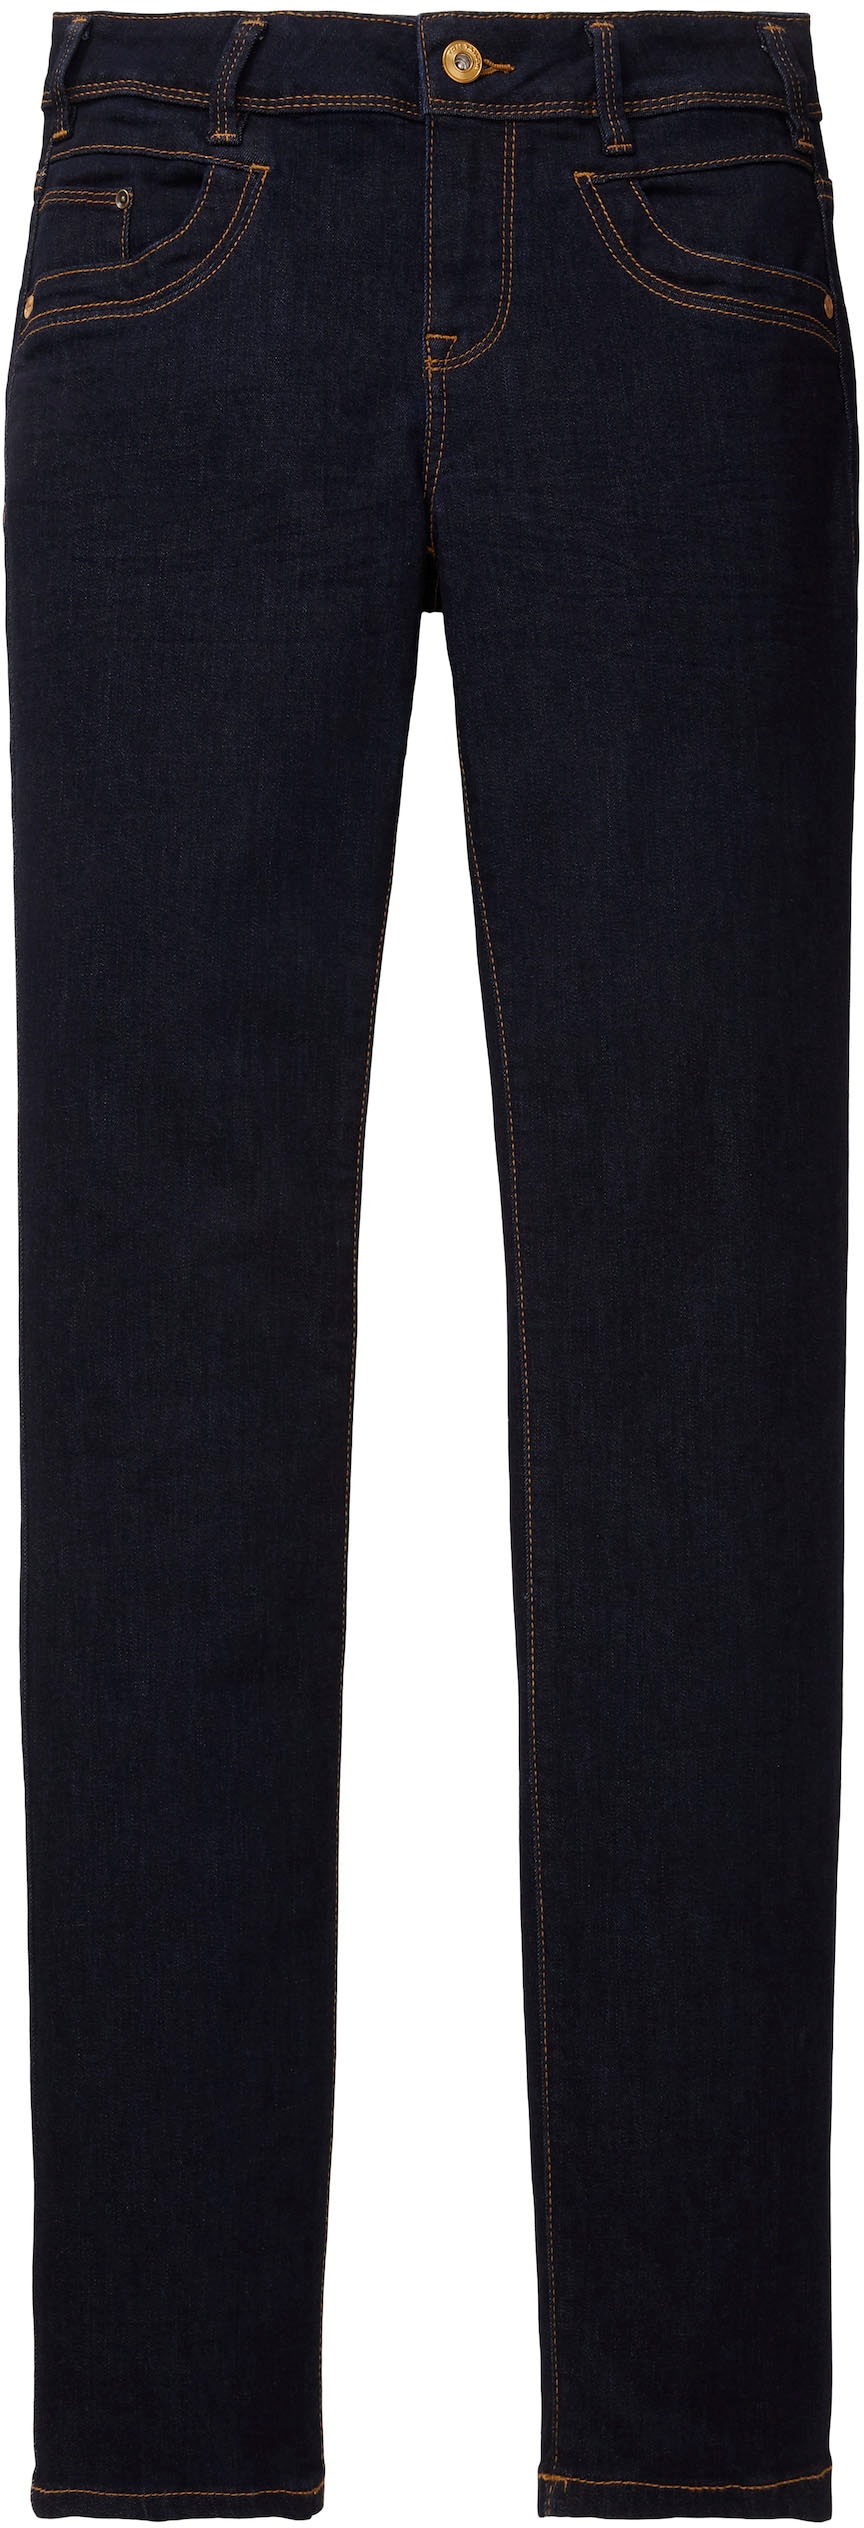 TOM TAILOR Gerade Jeans, mit Kontrastnähten jetzt bestellen